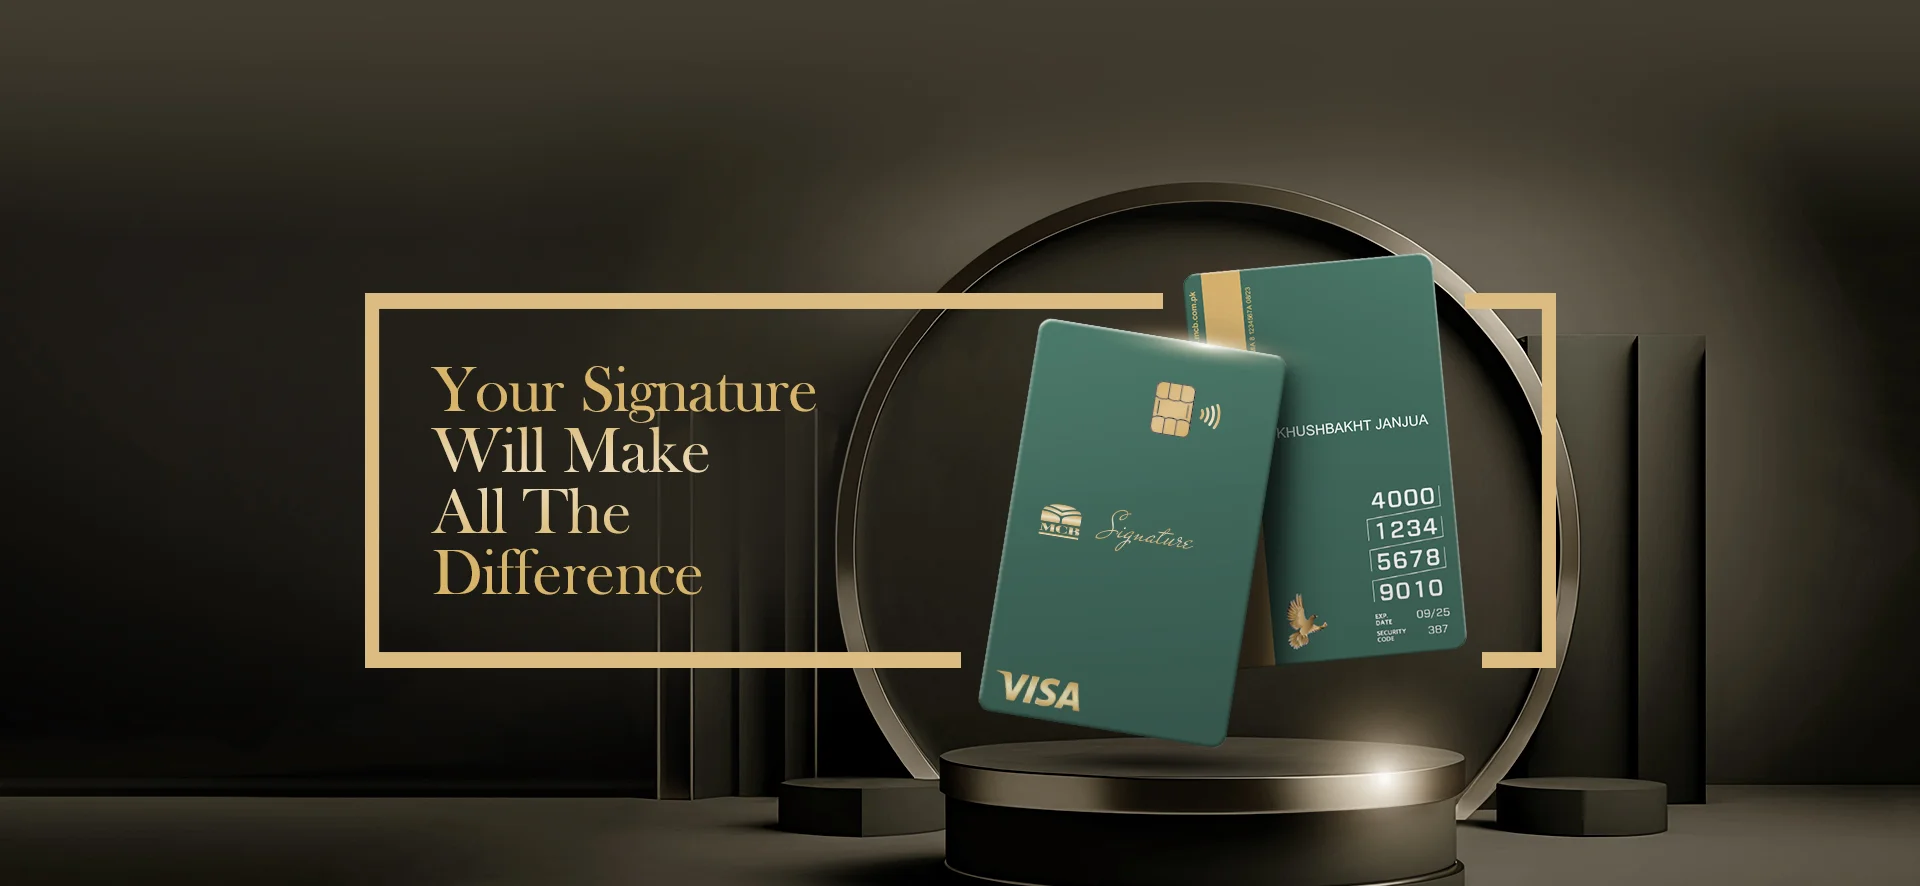 MCB Visa Signature Debit Card